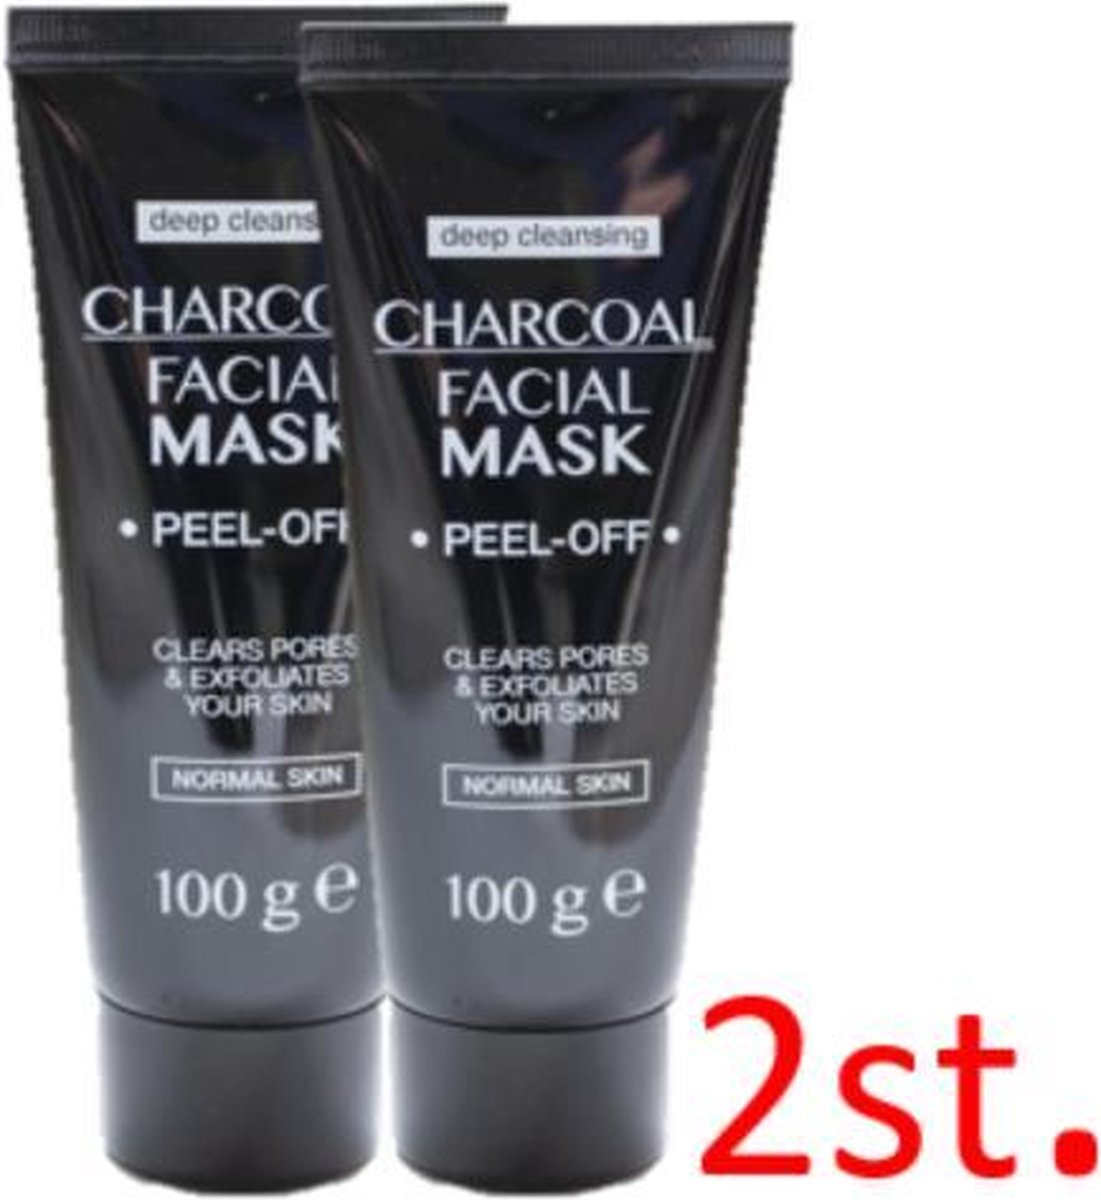 2x Houtskool Charcoal Facial Mask - Charcoal facial mask - Deep cleansing - Meeeter - Gezichtsverzorging - Peel-off - Normal skin - Houtskool - Spateltool - 2stuks..